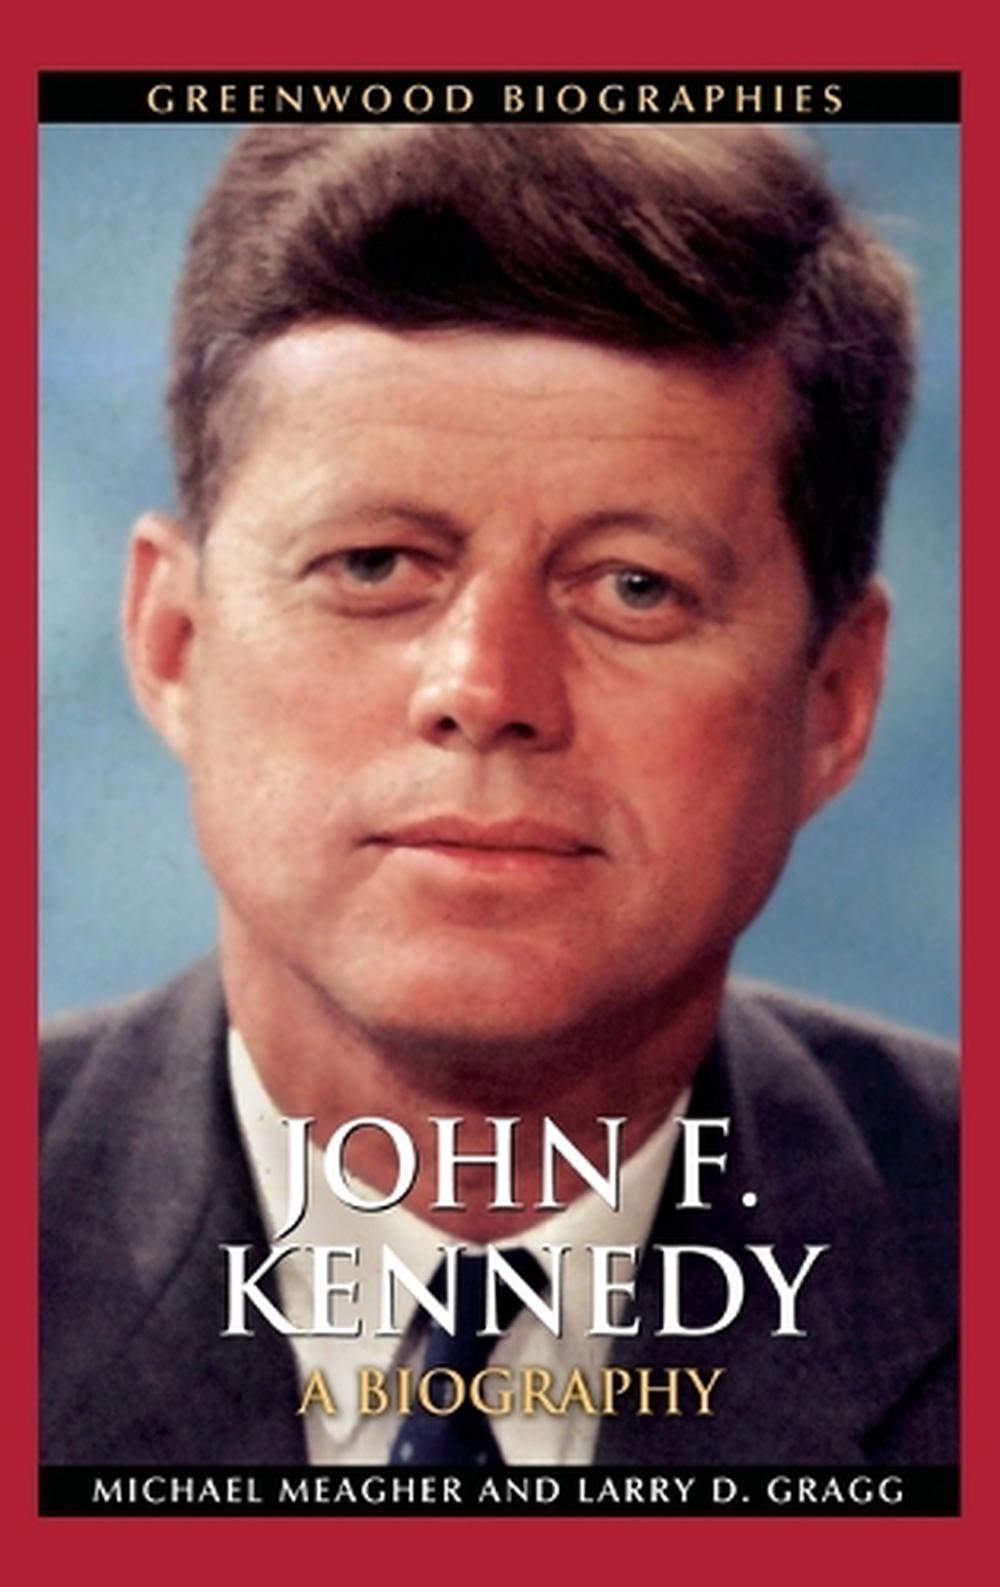 a biography about john f kennedy